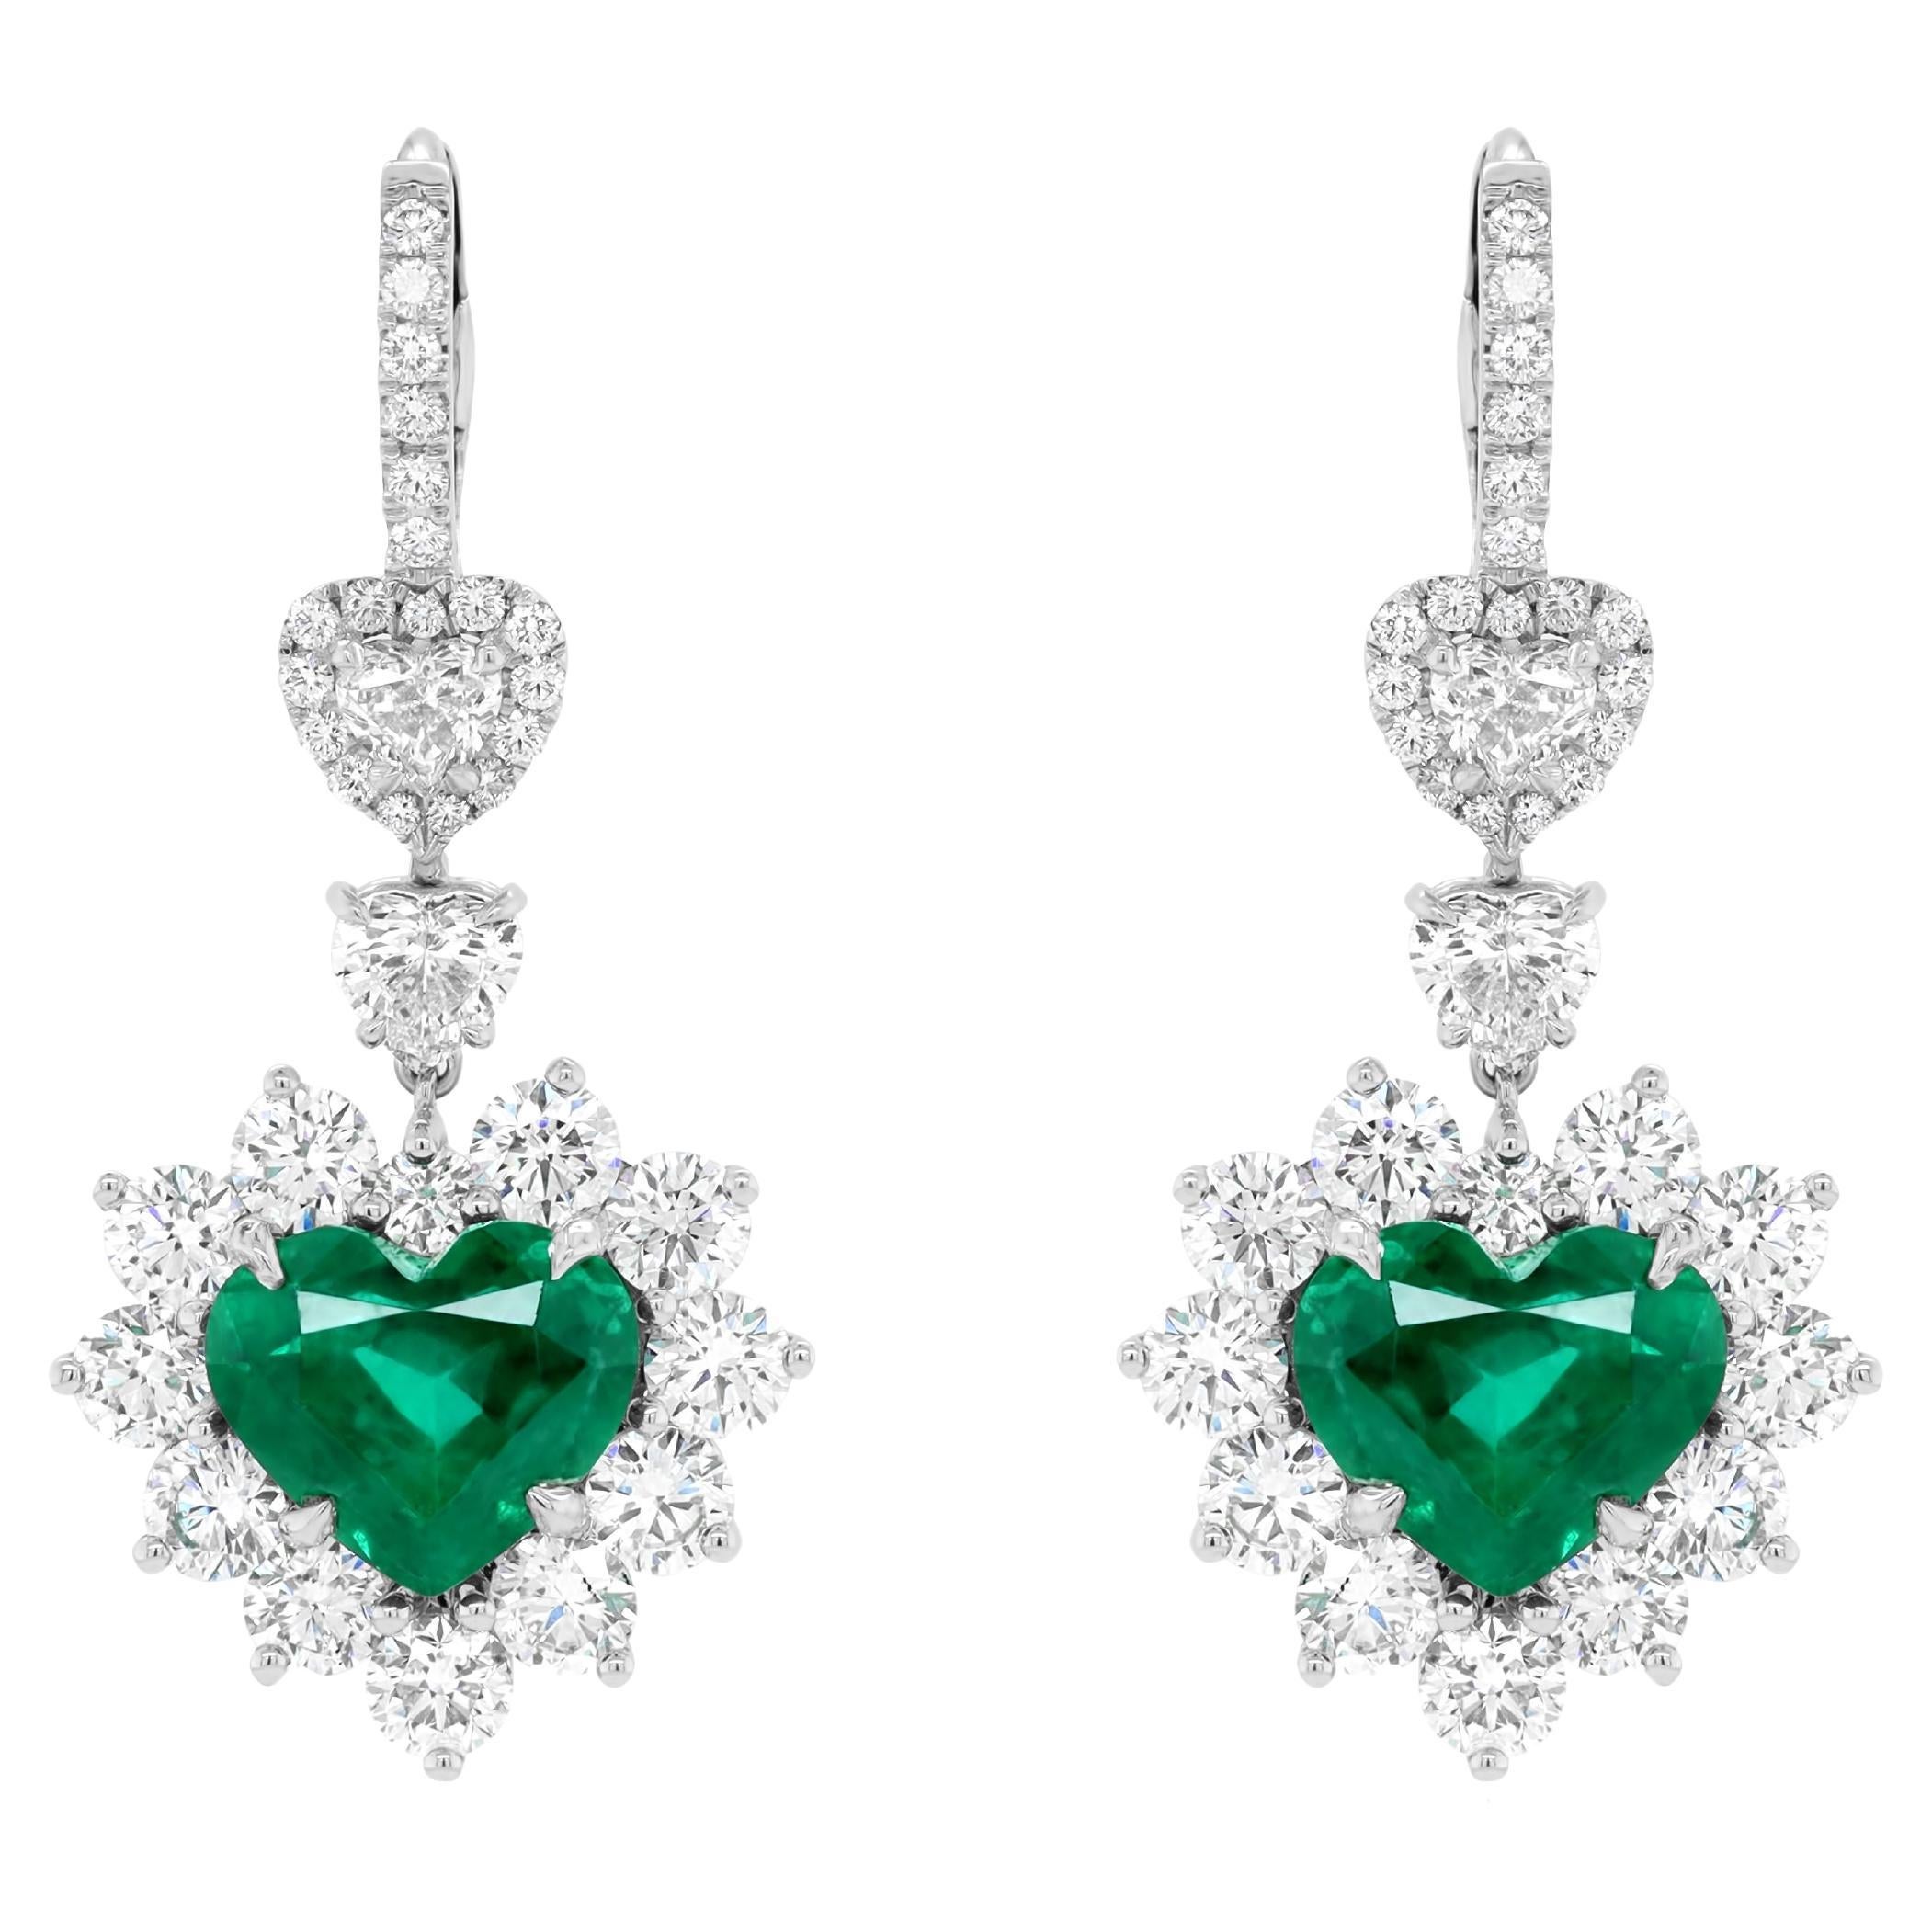 Diana M. Certified 8.16 Carat Heart Shaped Emerald Earrings For Sale